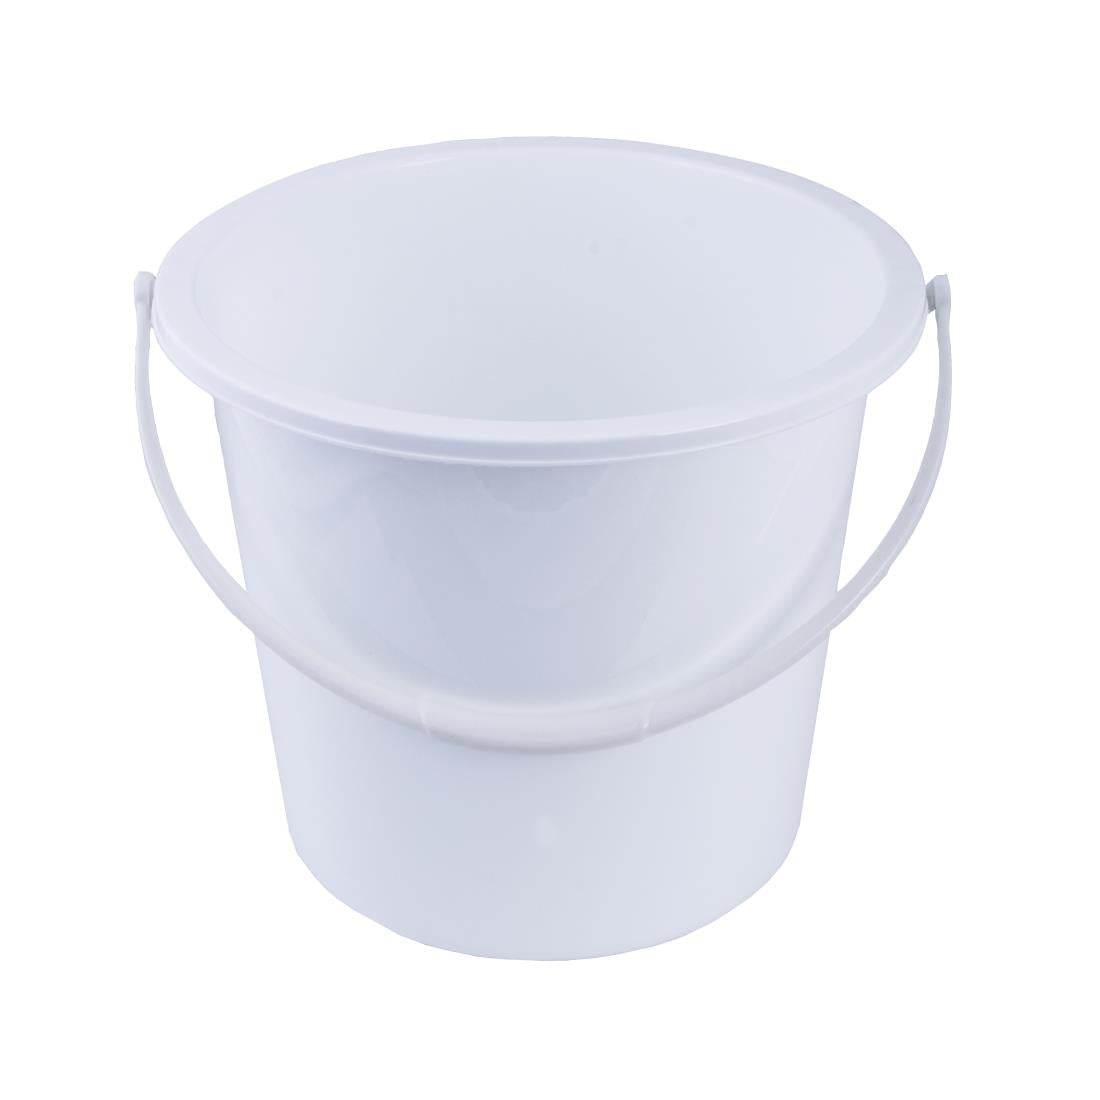 Jantex Round Plastic Bucket White 10Ltr JD Catering Equipment Solutions Ltd